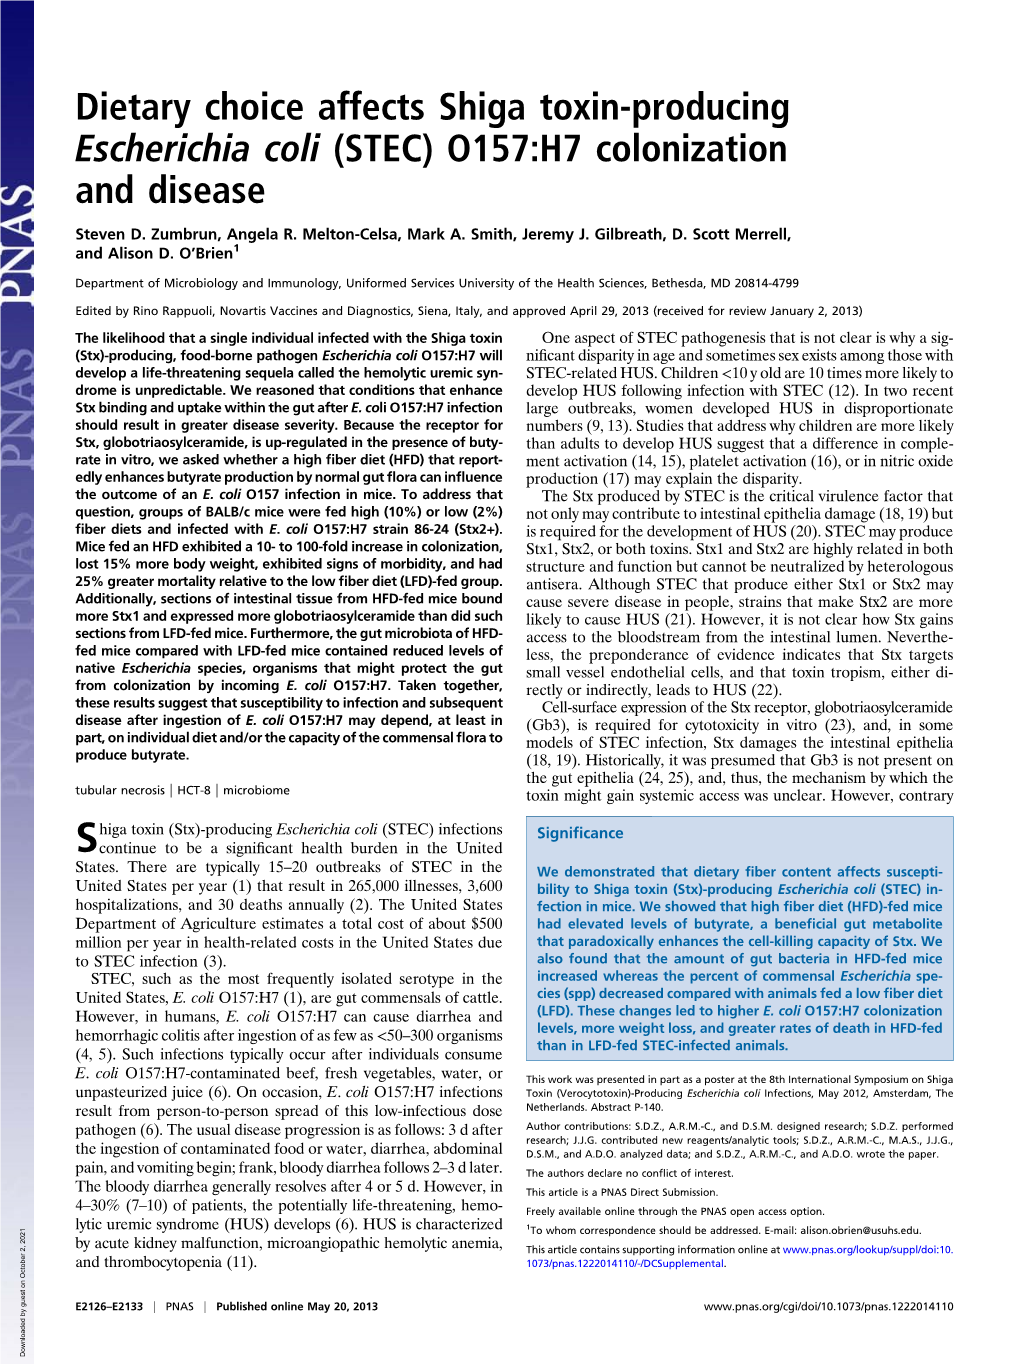 Dietary Choice Affects Shiga Toxin-Producing Escherichia Coli (STEC) O157:H7 Colonization and Disease